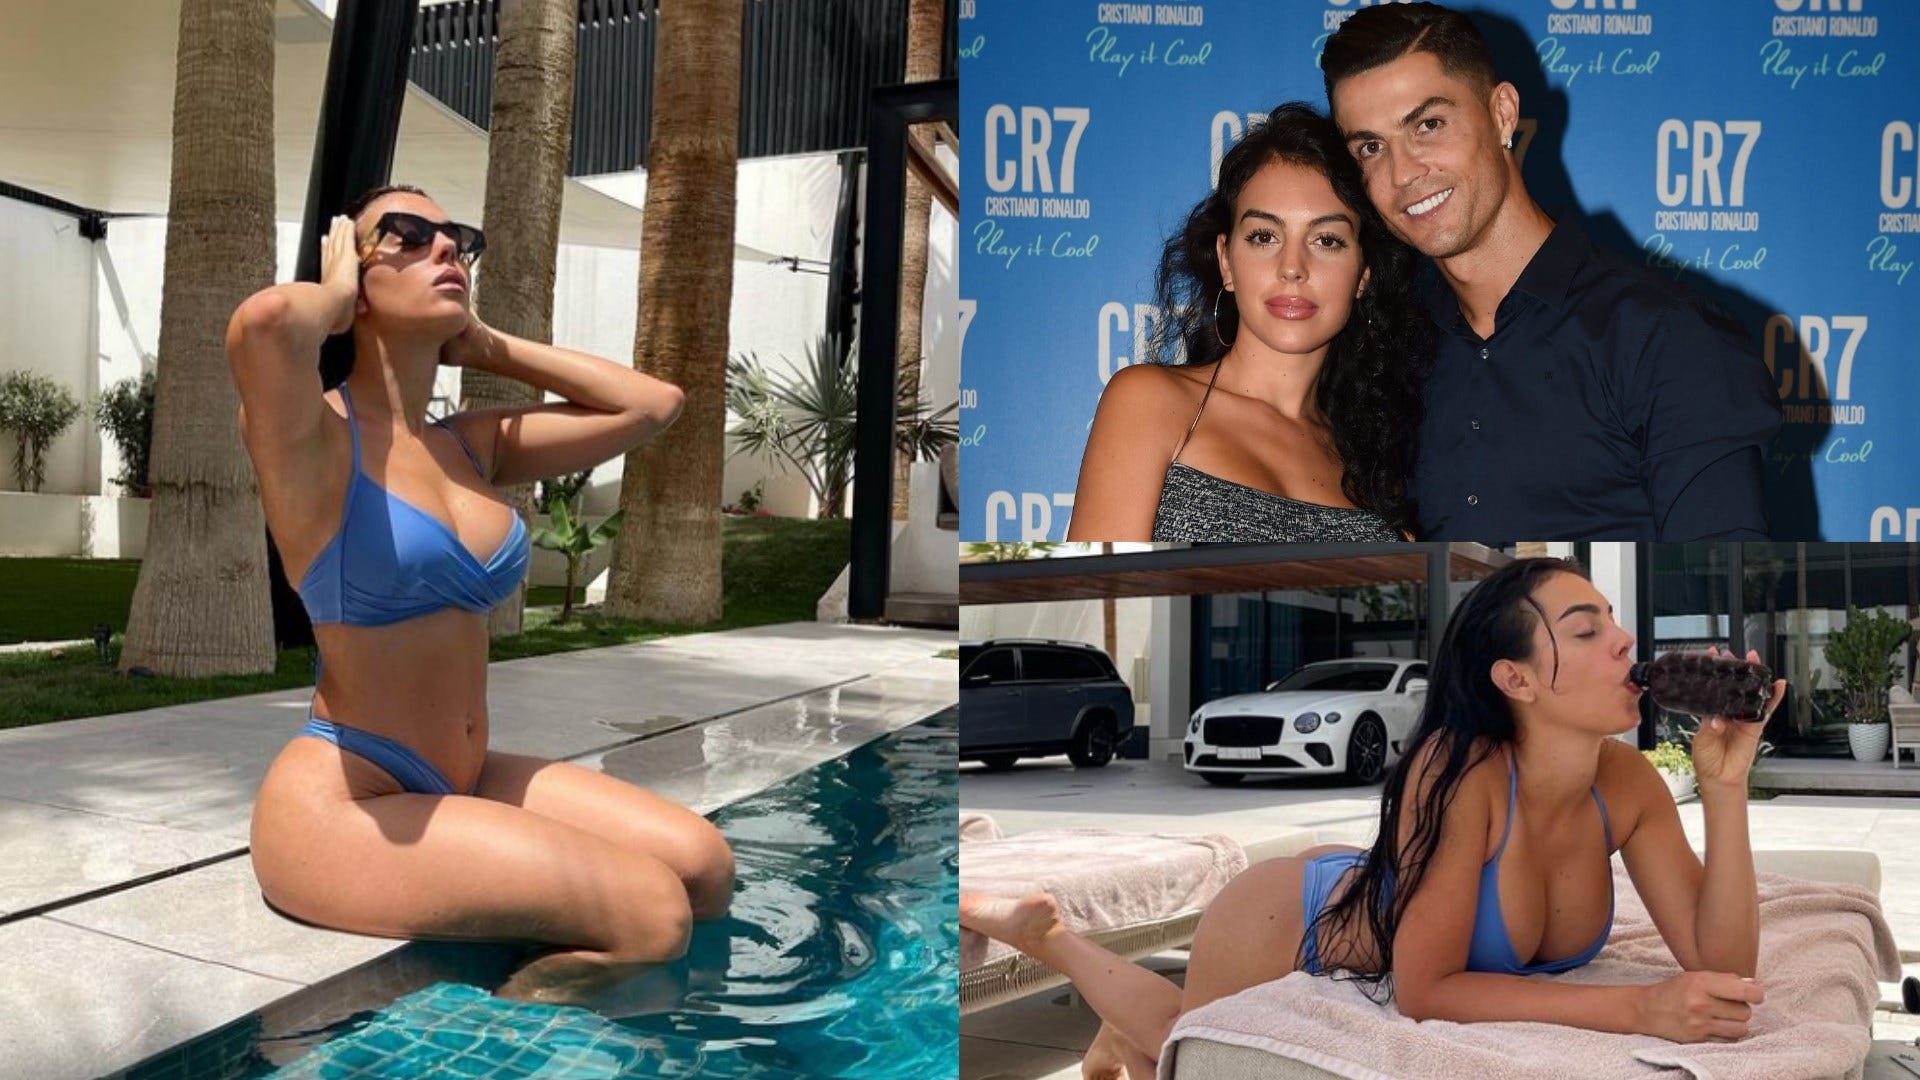 Cristiano Ronaldos girlfriend Georgina Rodriguez posts racy bikini pictures on Instagram as she risks breaking strict Saudi Arabian law Goal photo